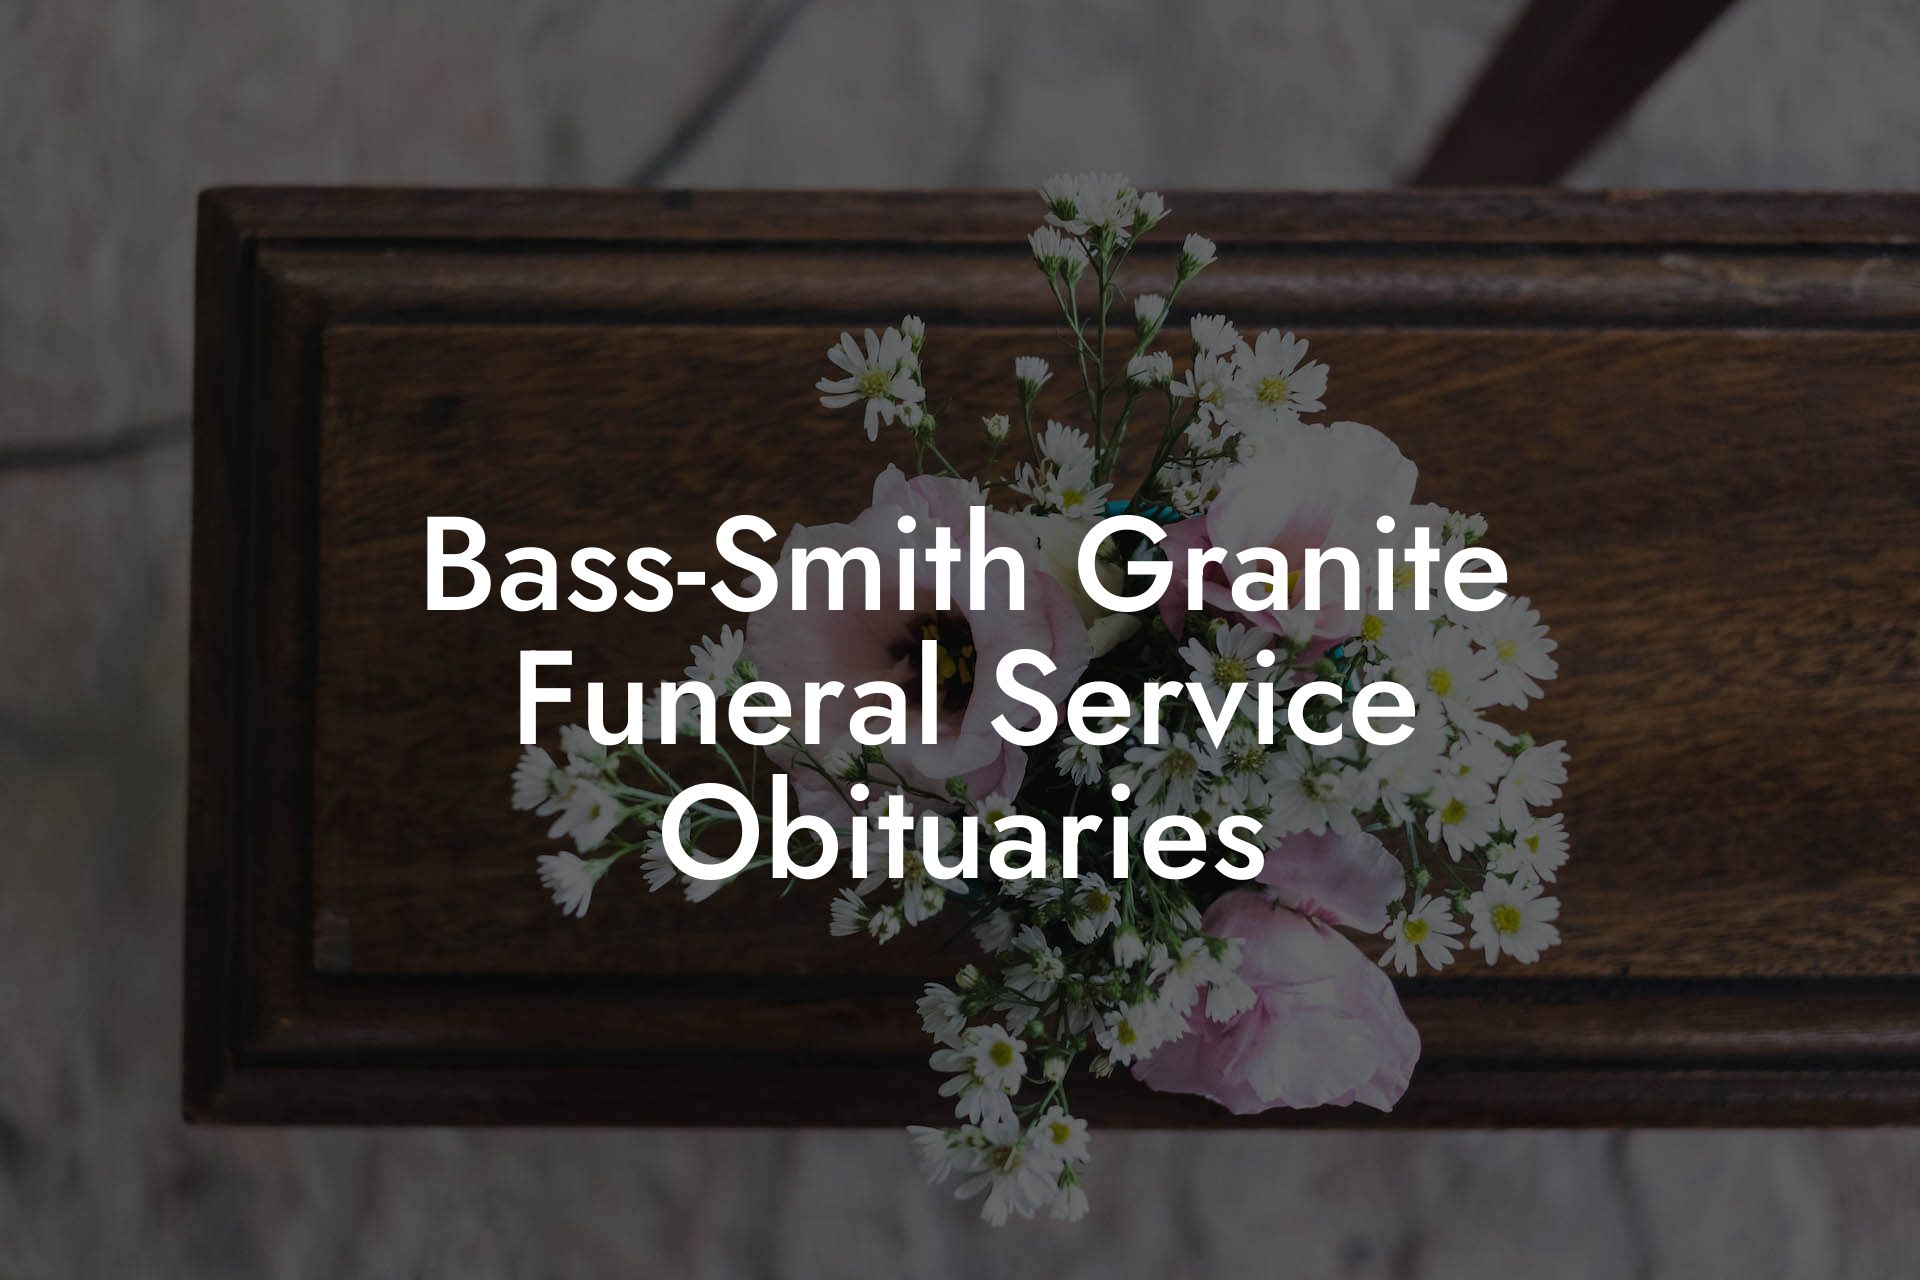 Bass-Smith Granite Funeral Service Obituaries